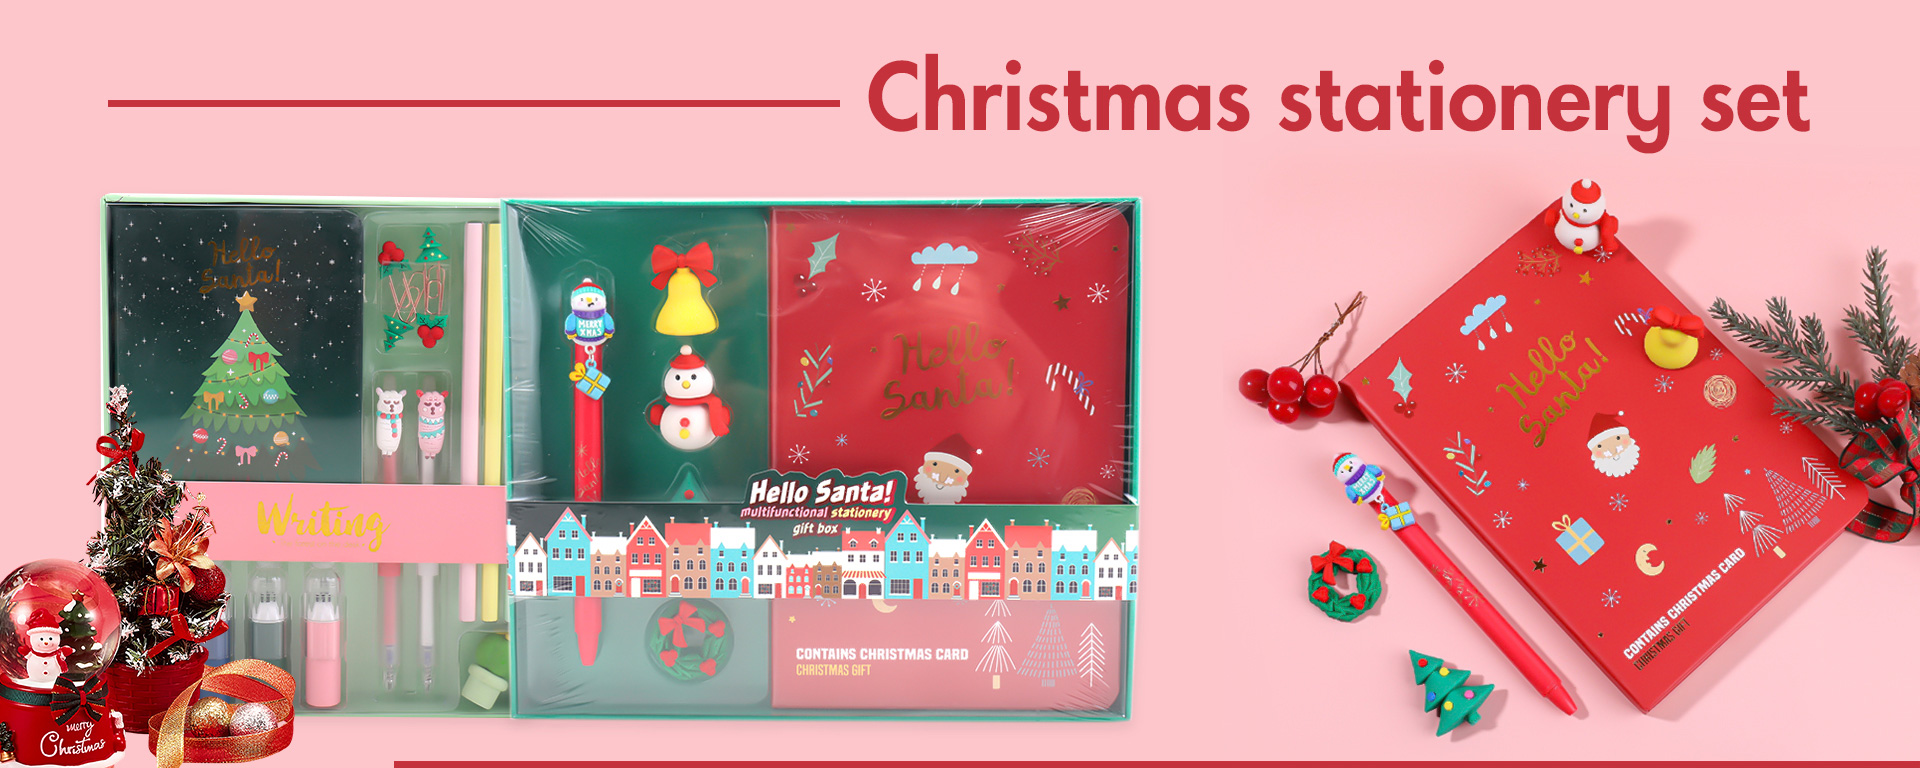 BSB-Christmas Stationery Set